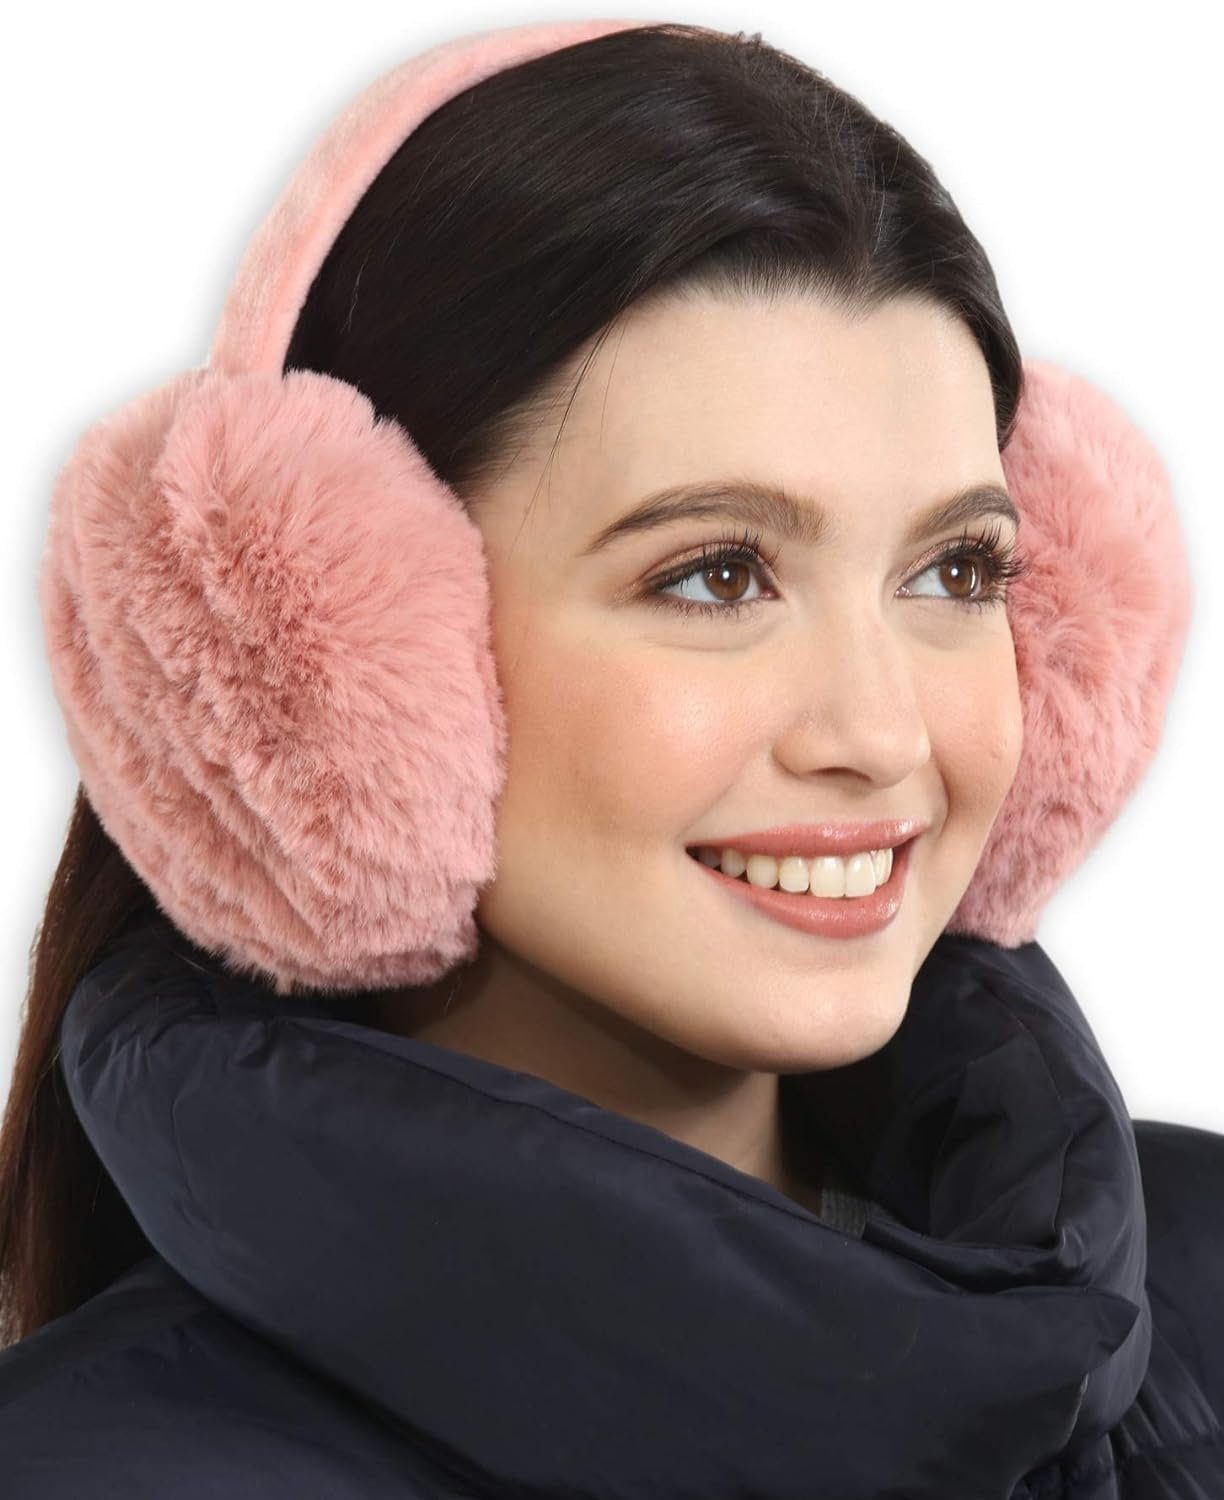 Opspring Ohrenwärmer Ohrenschützer,Winter-Ohrenwärmer,Ohrenschützer für kaltes Wetter Rosa